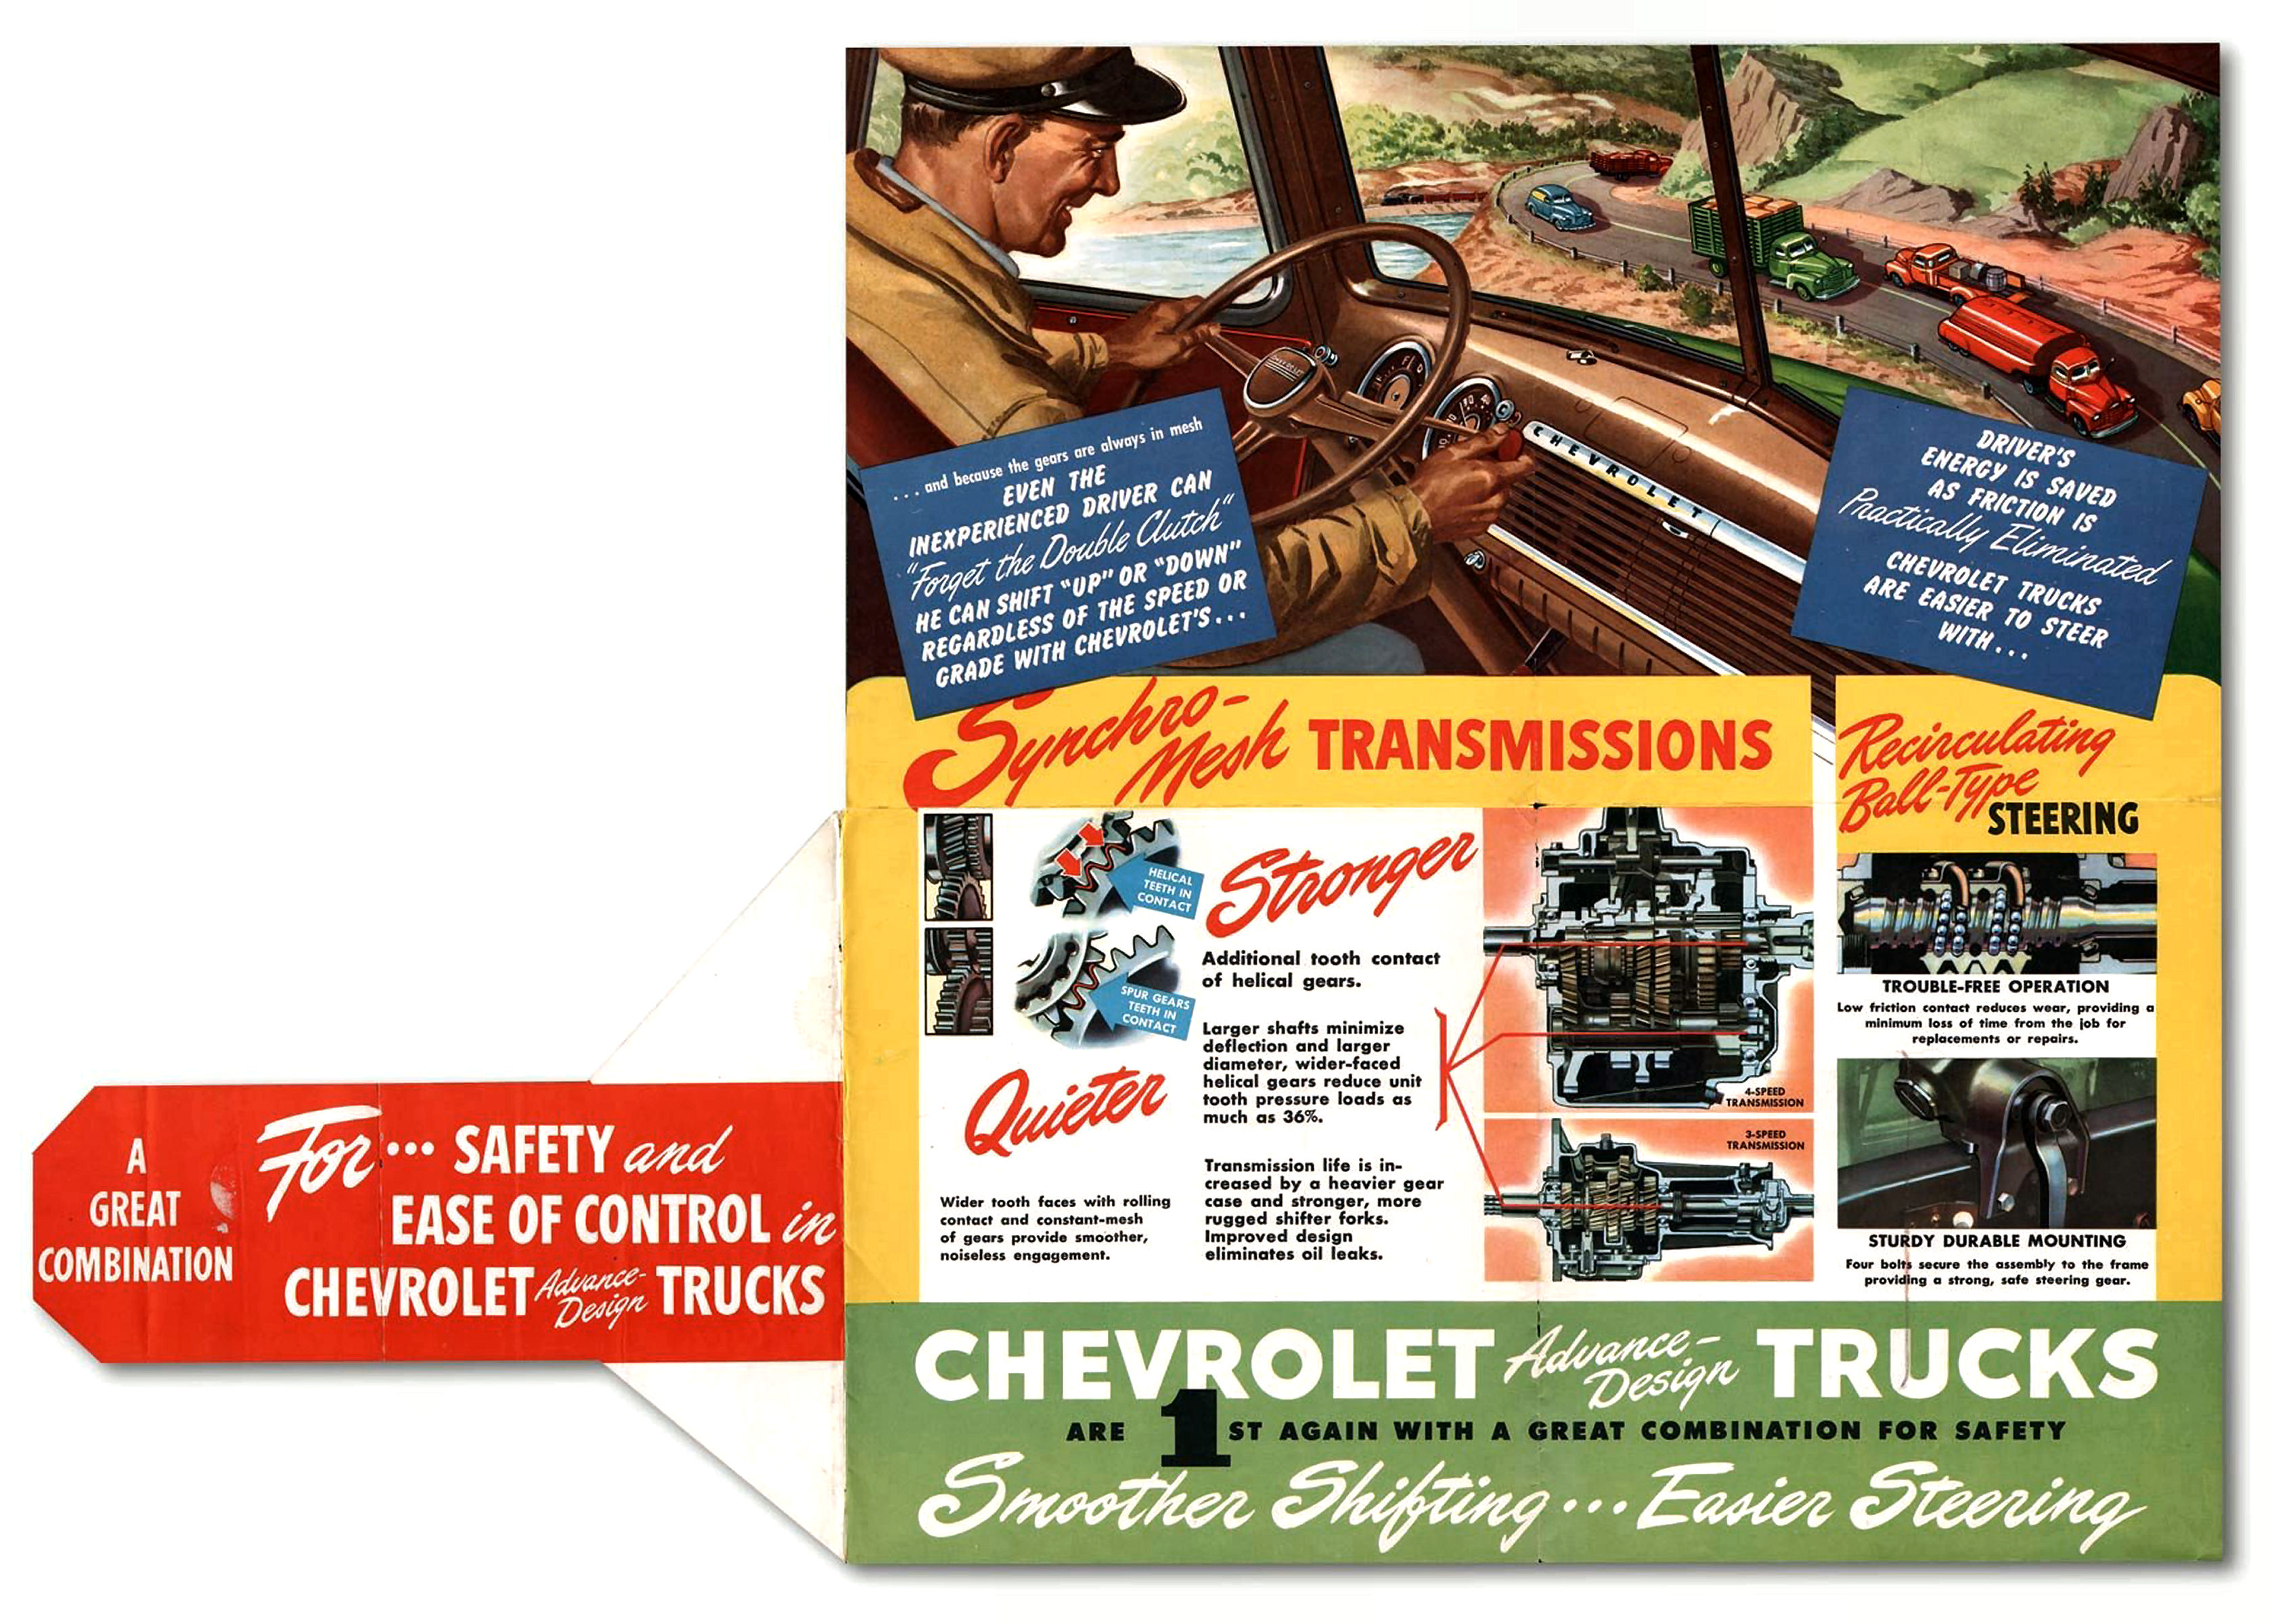 1947 Chevrolet Advance Design Trucks MaileSide A